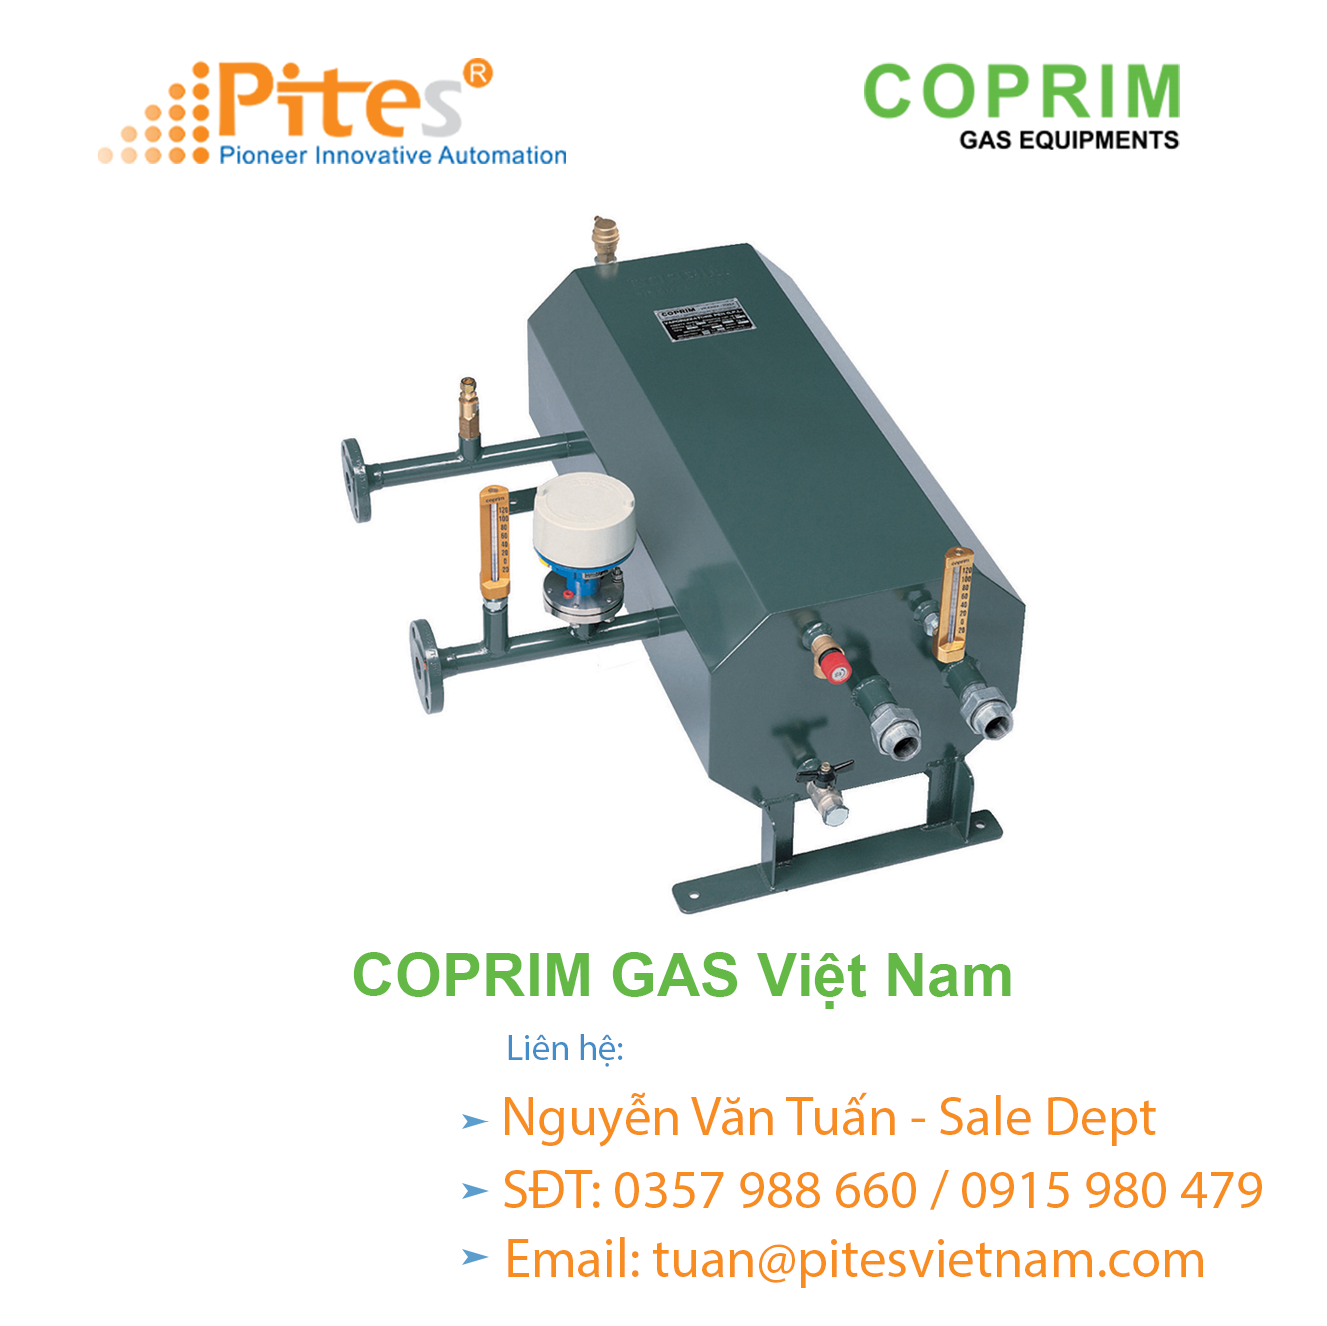 coprim-gas-vietnam-coprim-gas-viet-nam-dai-ly-coprim-gas-list-code-coprim-gas-part-9.png